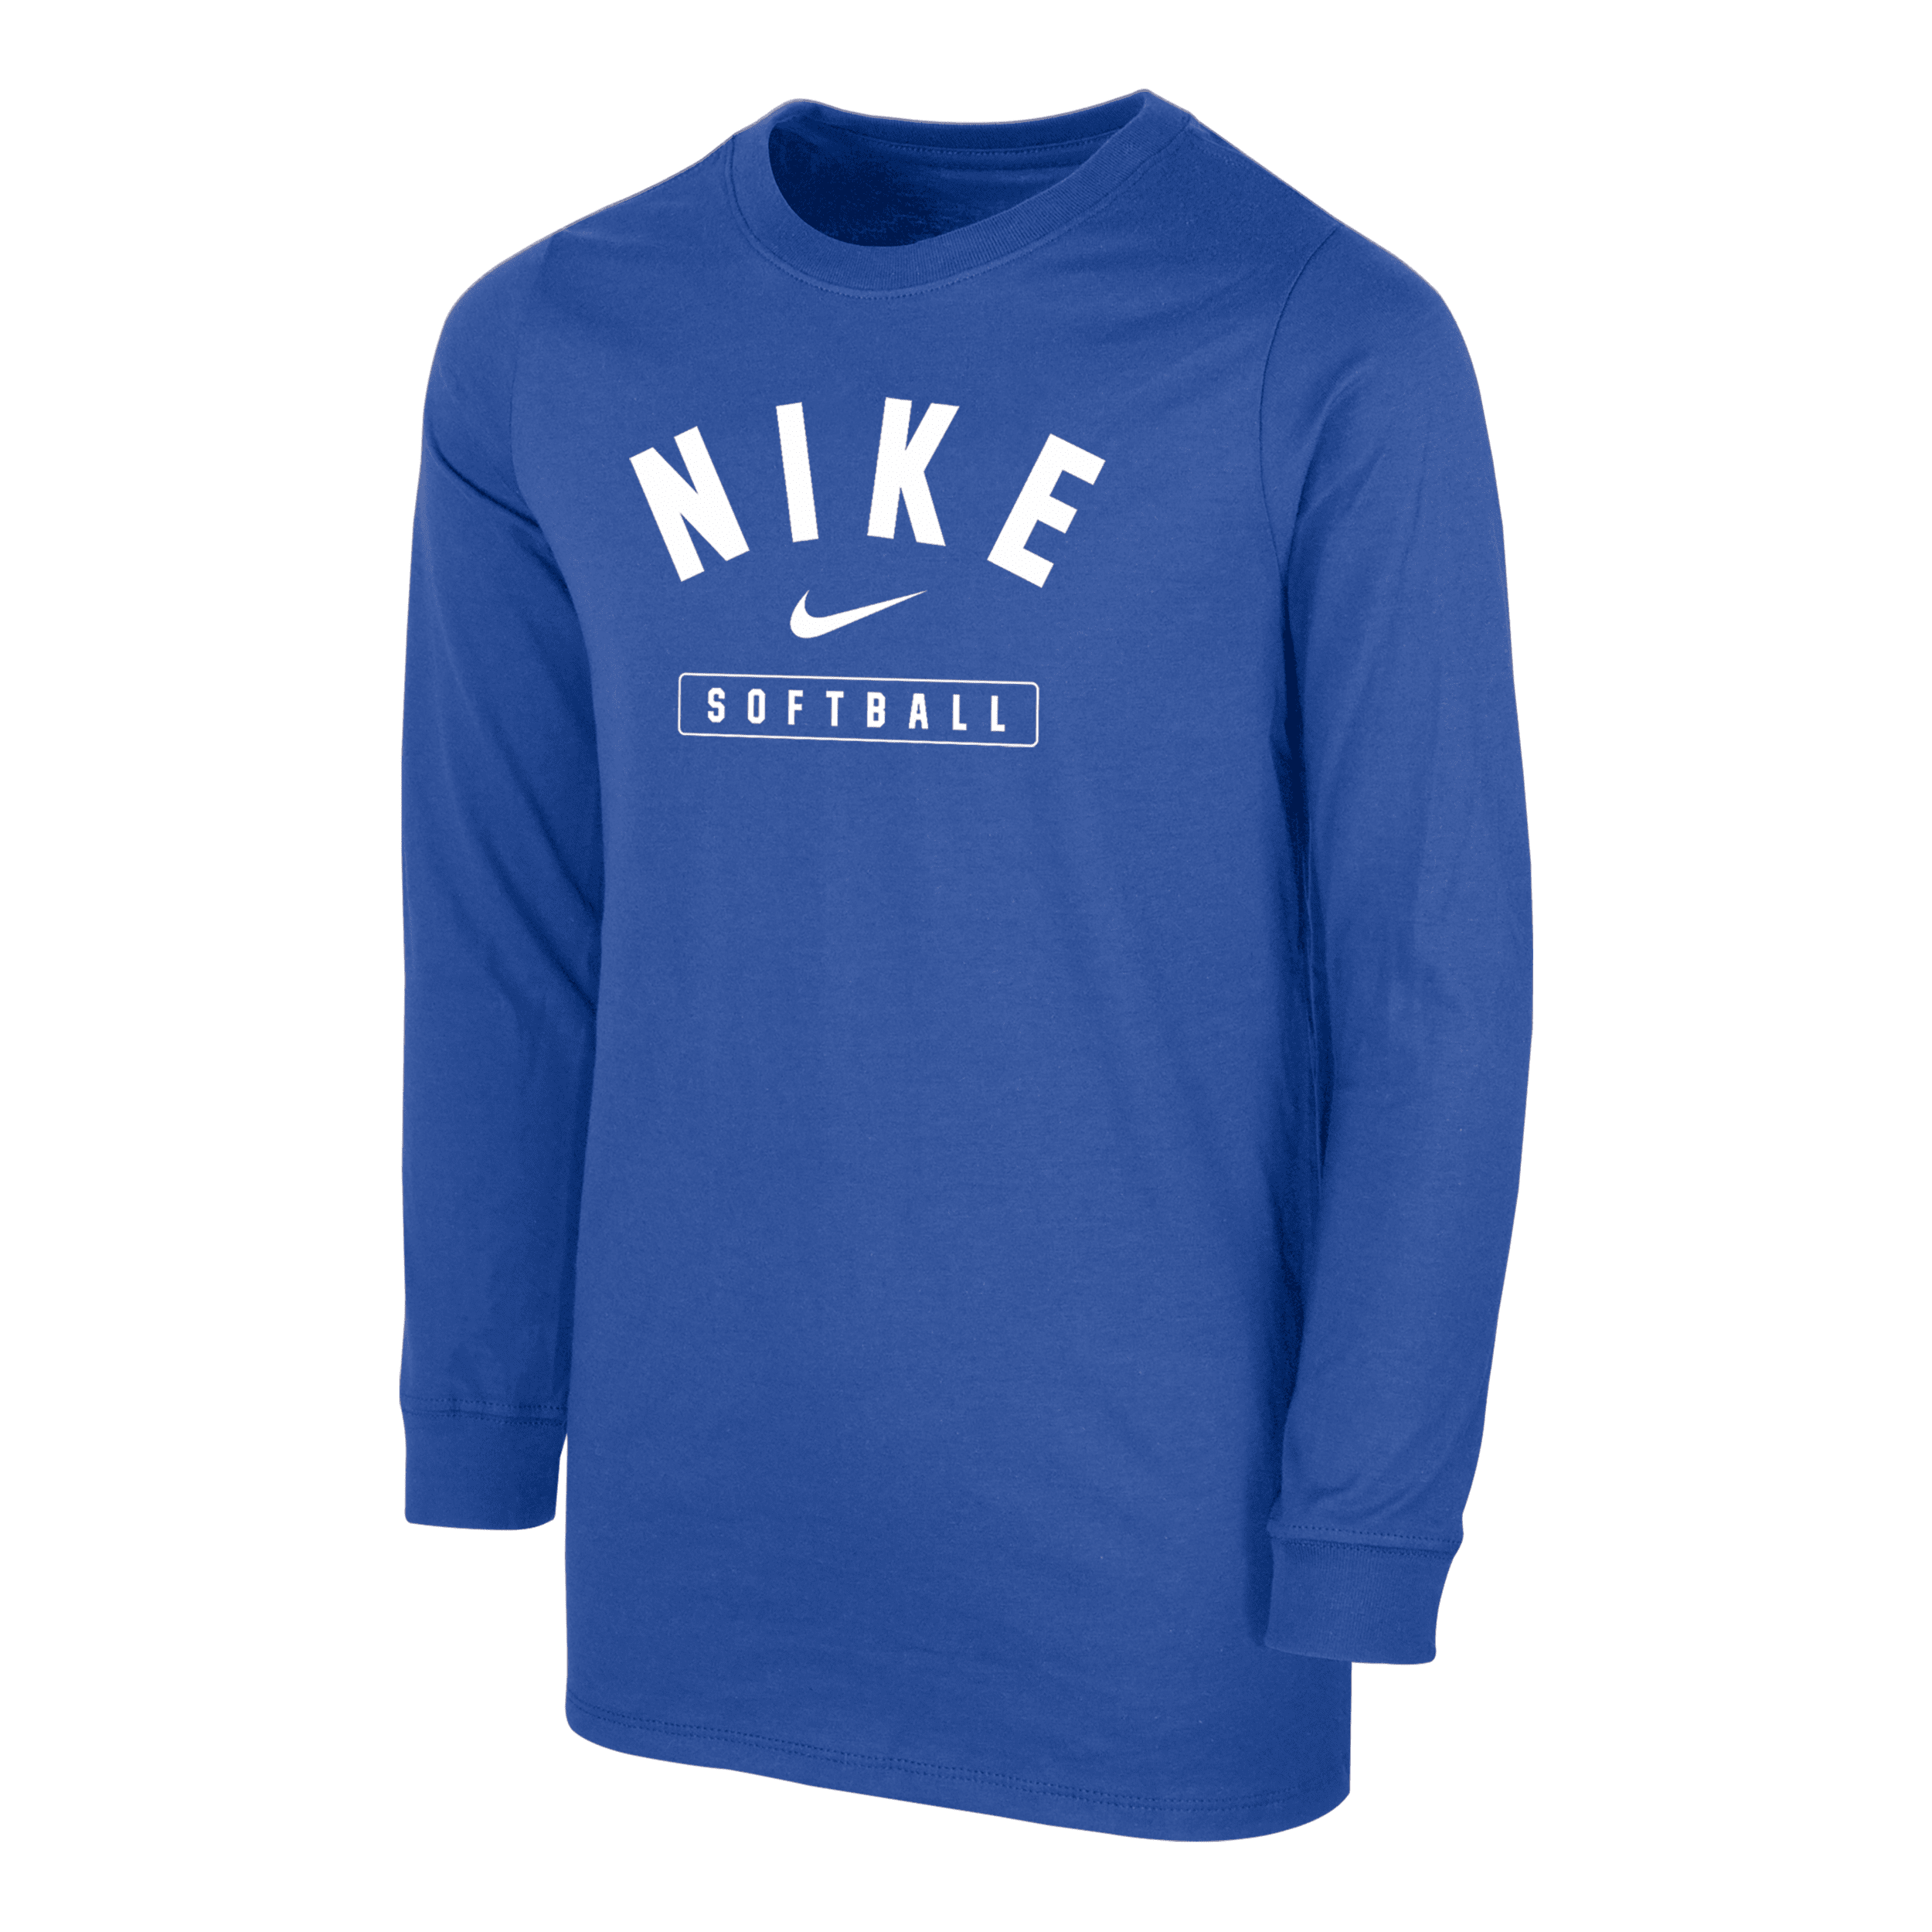 Nike Big Kids' Softball Long-sleeve T-shirt In Blue